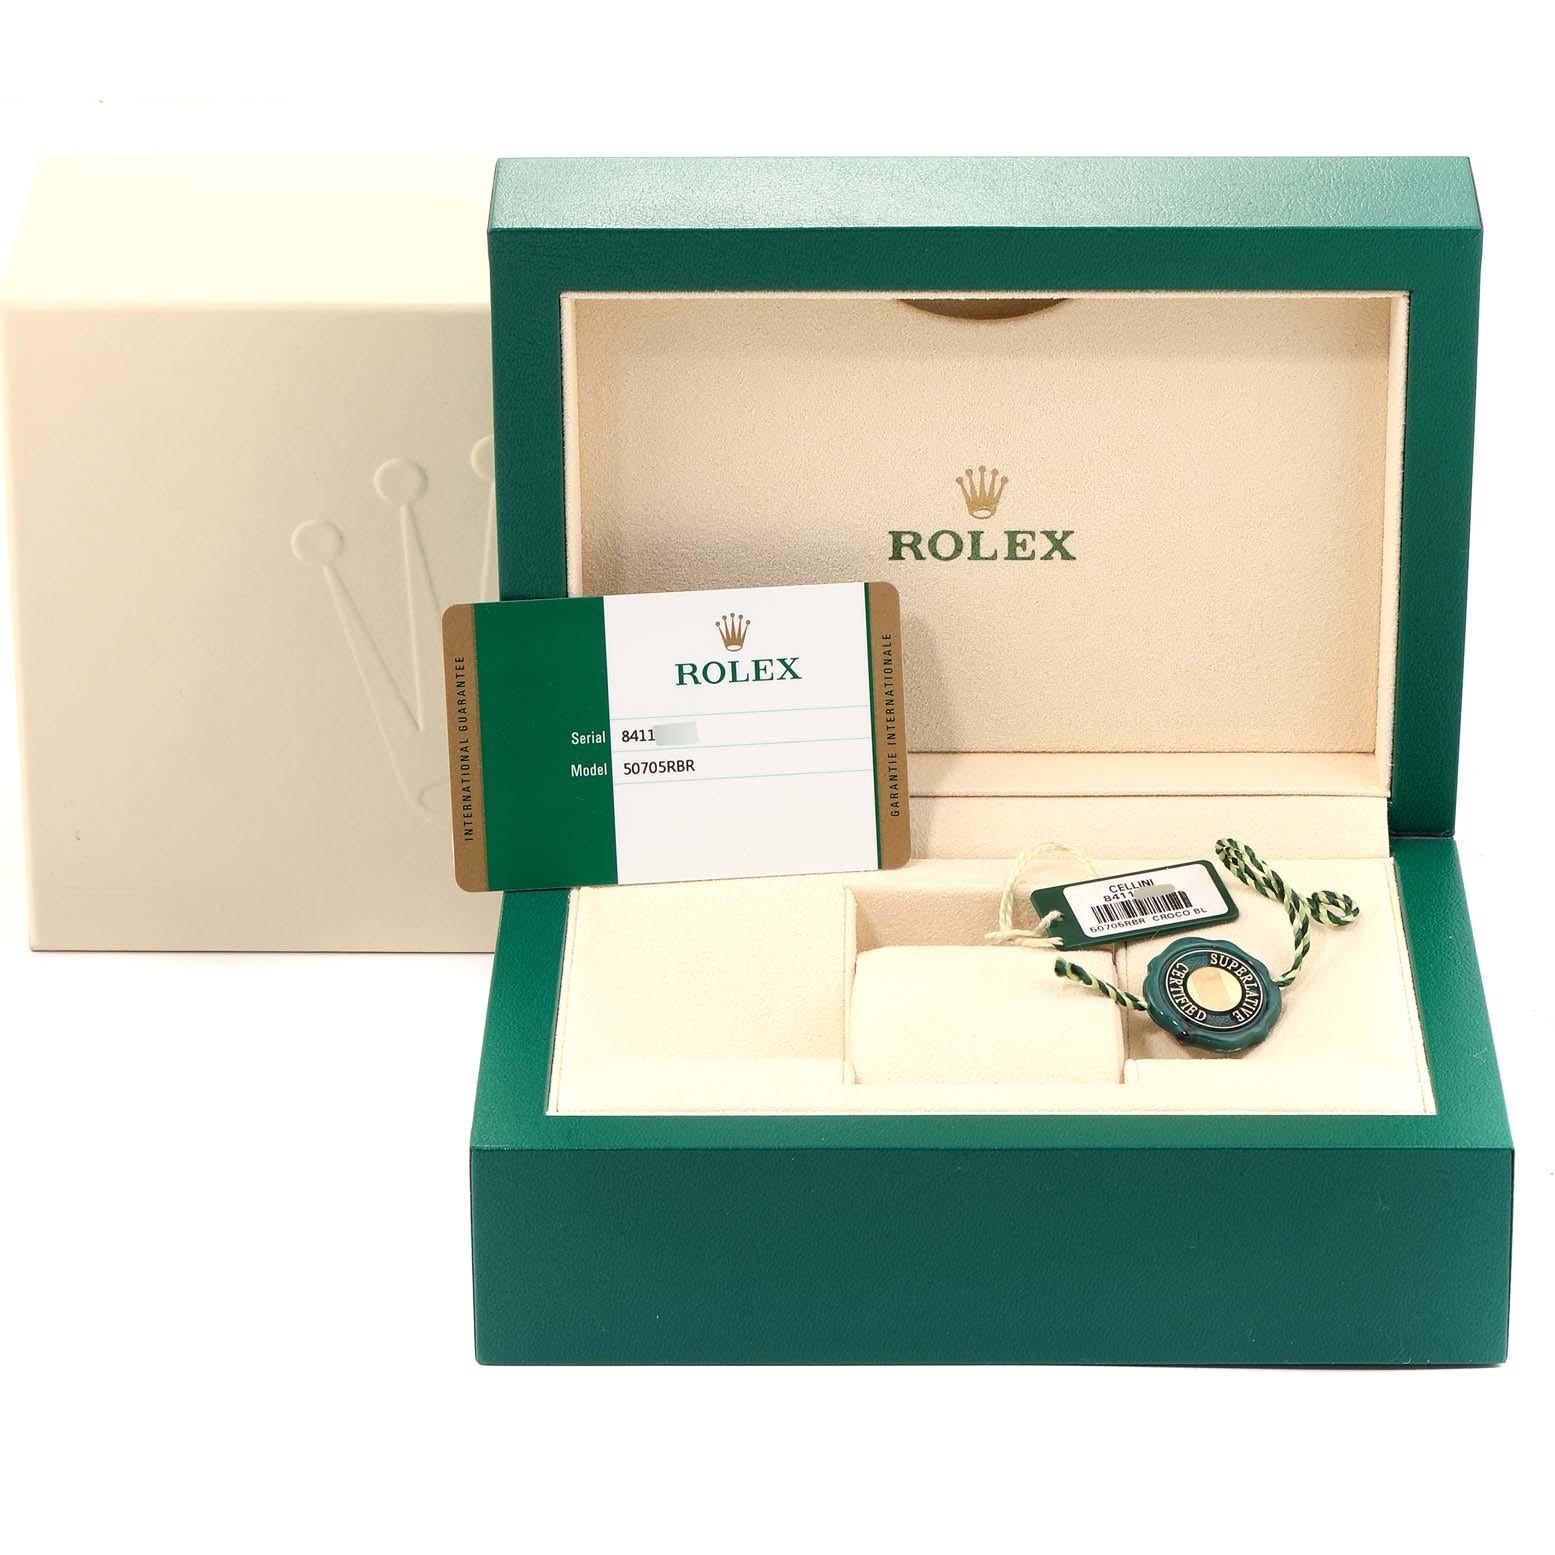 Rolex Cellini Everose Gold Automatic Diamond Men's Watch 50705 Unworn For Sale 7